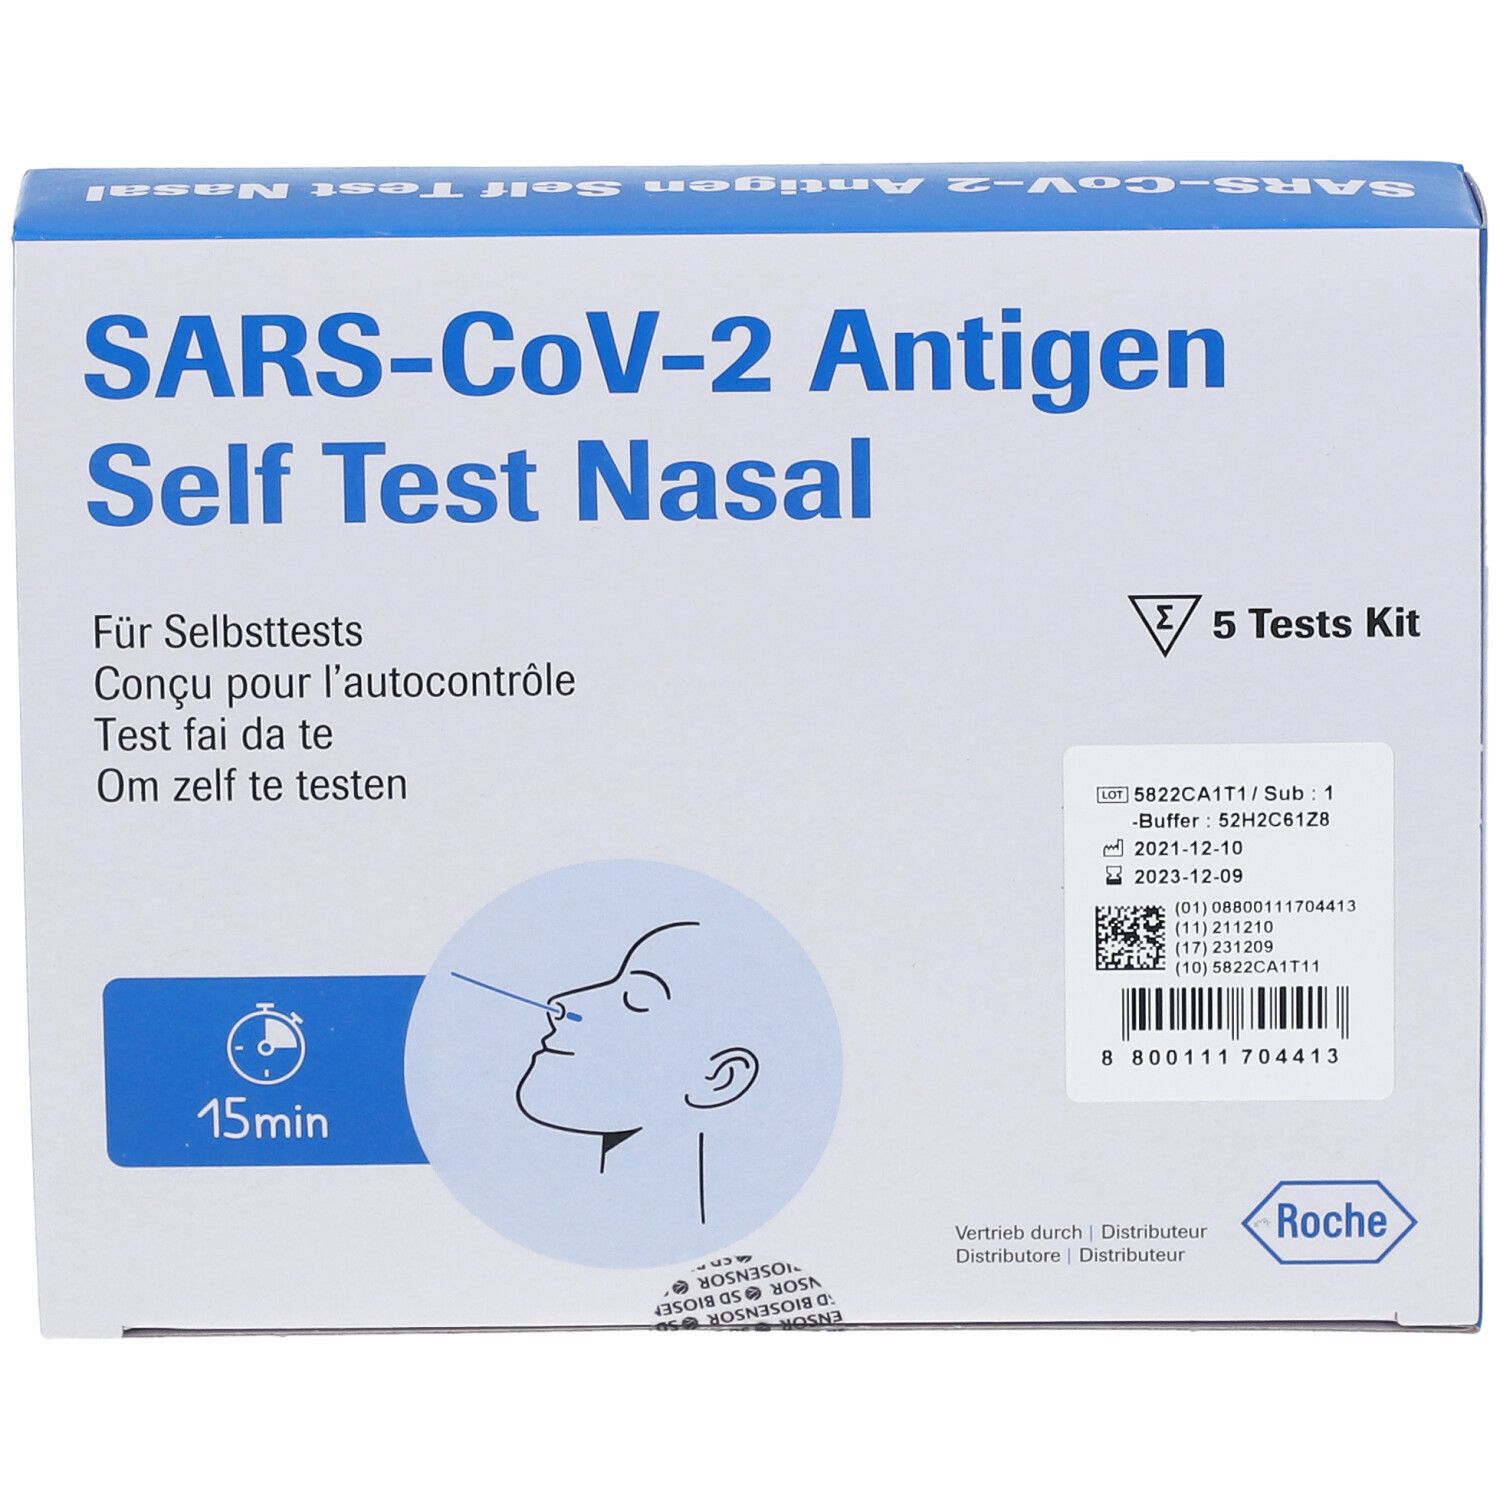 SARS-CoV-2 Rapid Antigen Test